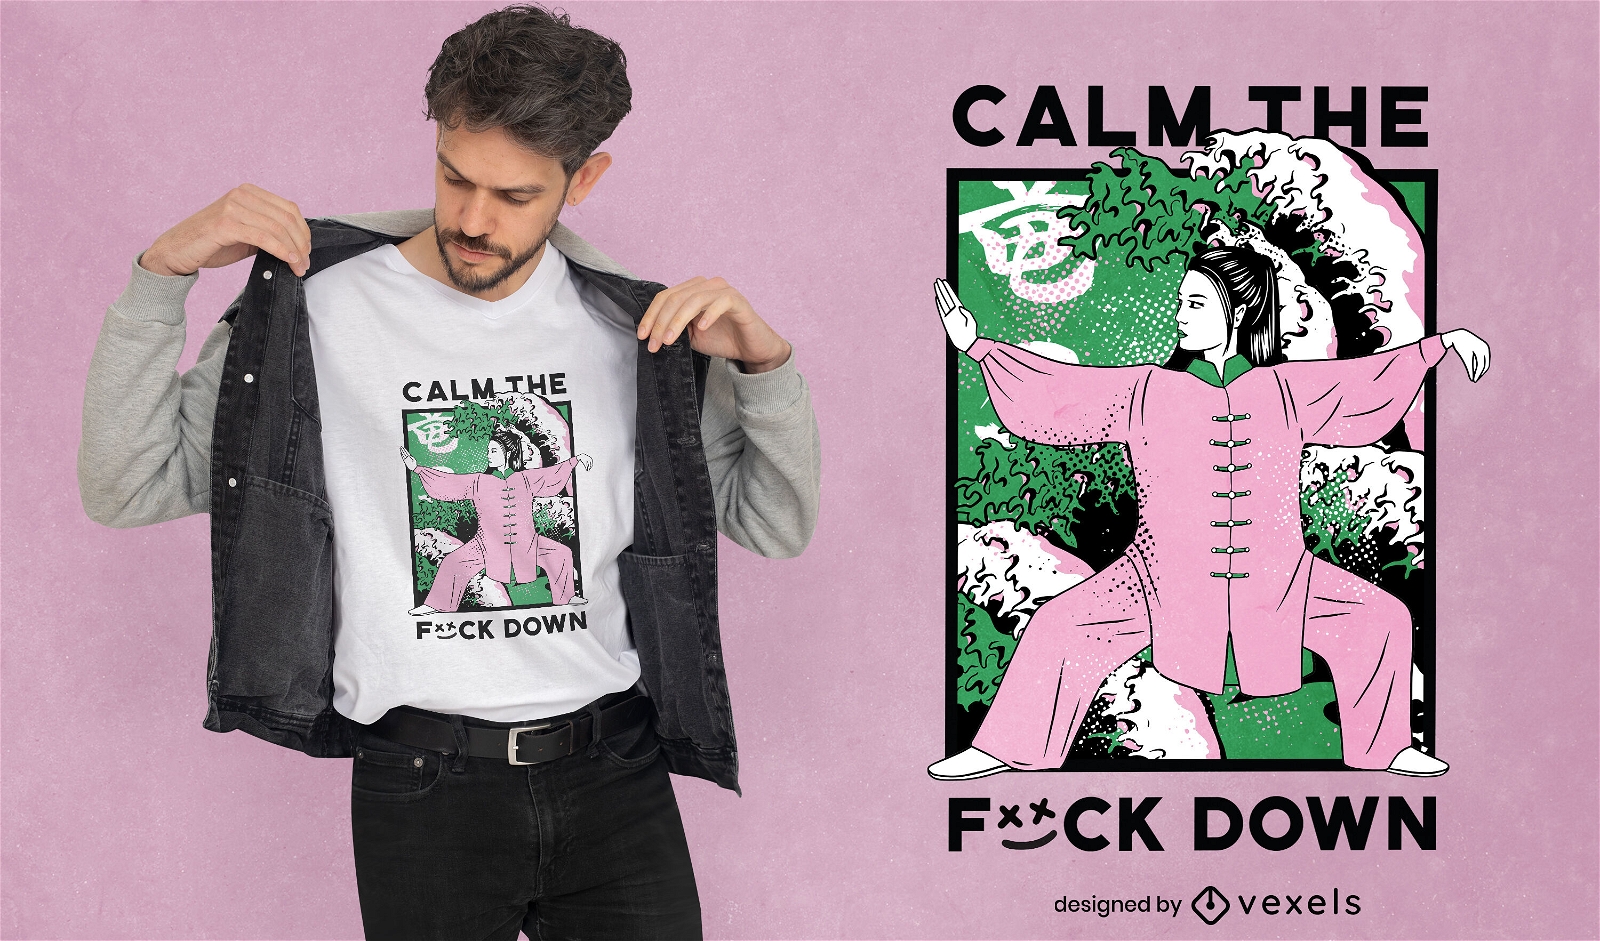 Calm the f*ck down t-shirt design